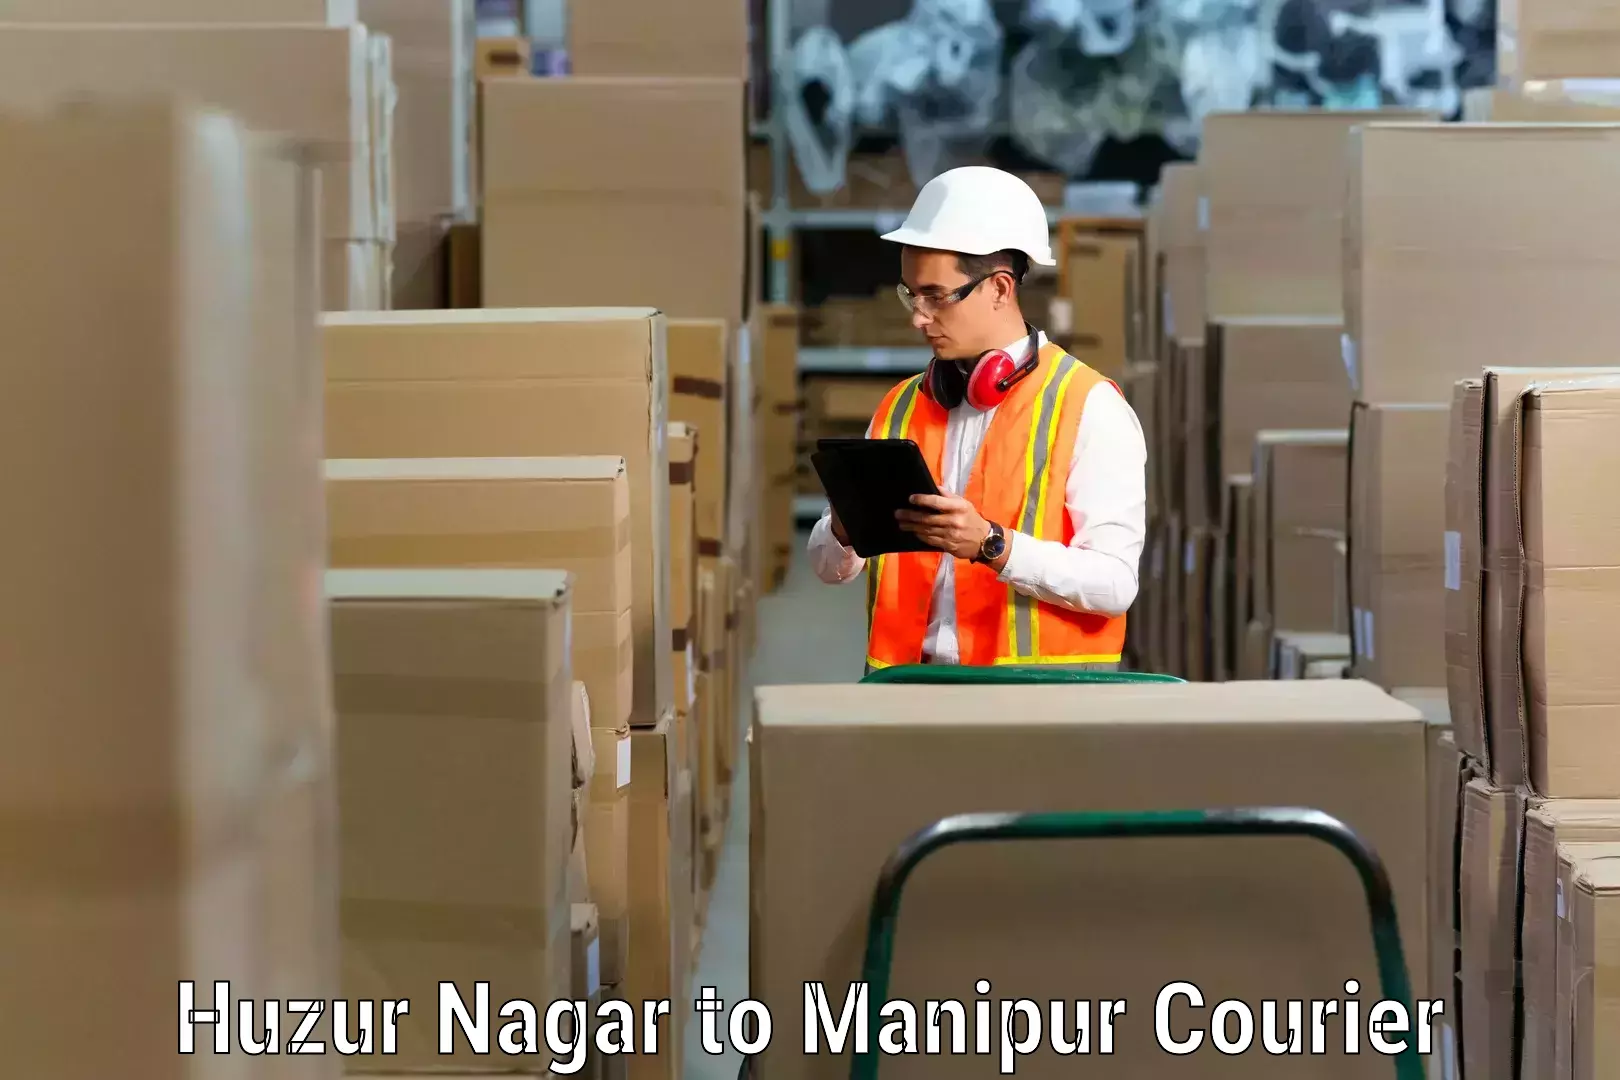 Furniture delivery service Huzur Nagar to Manipur